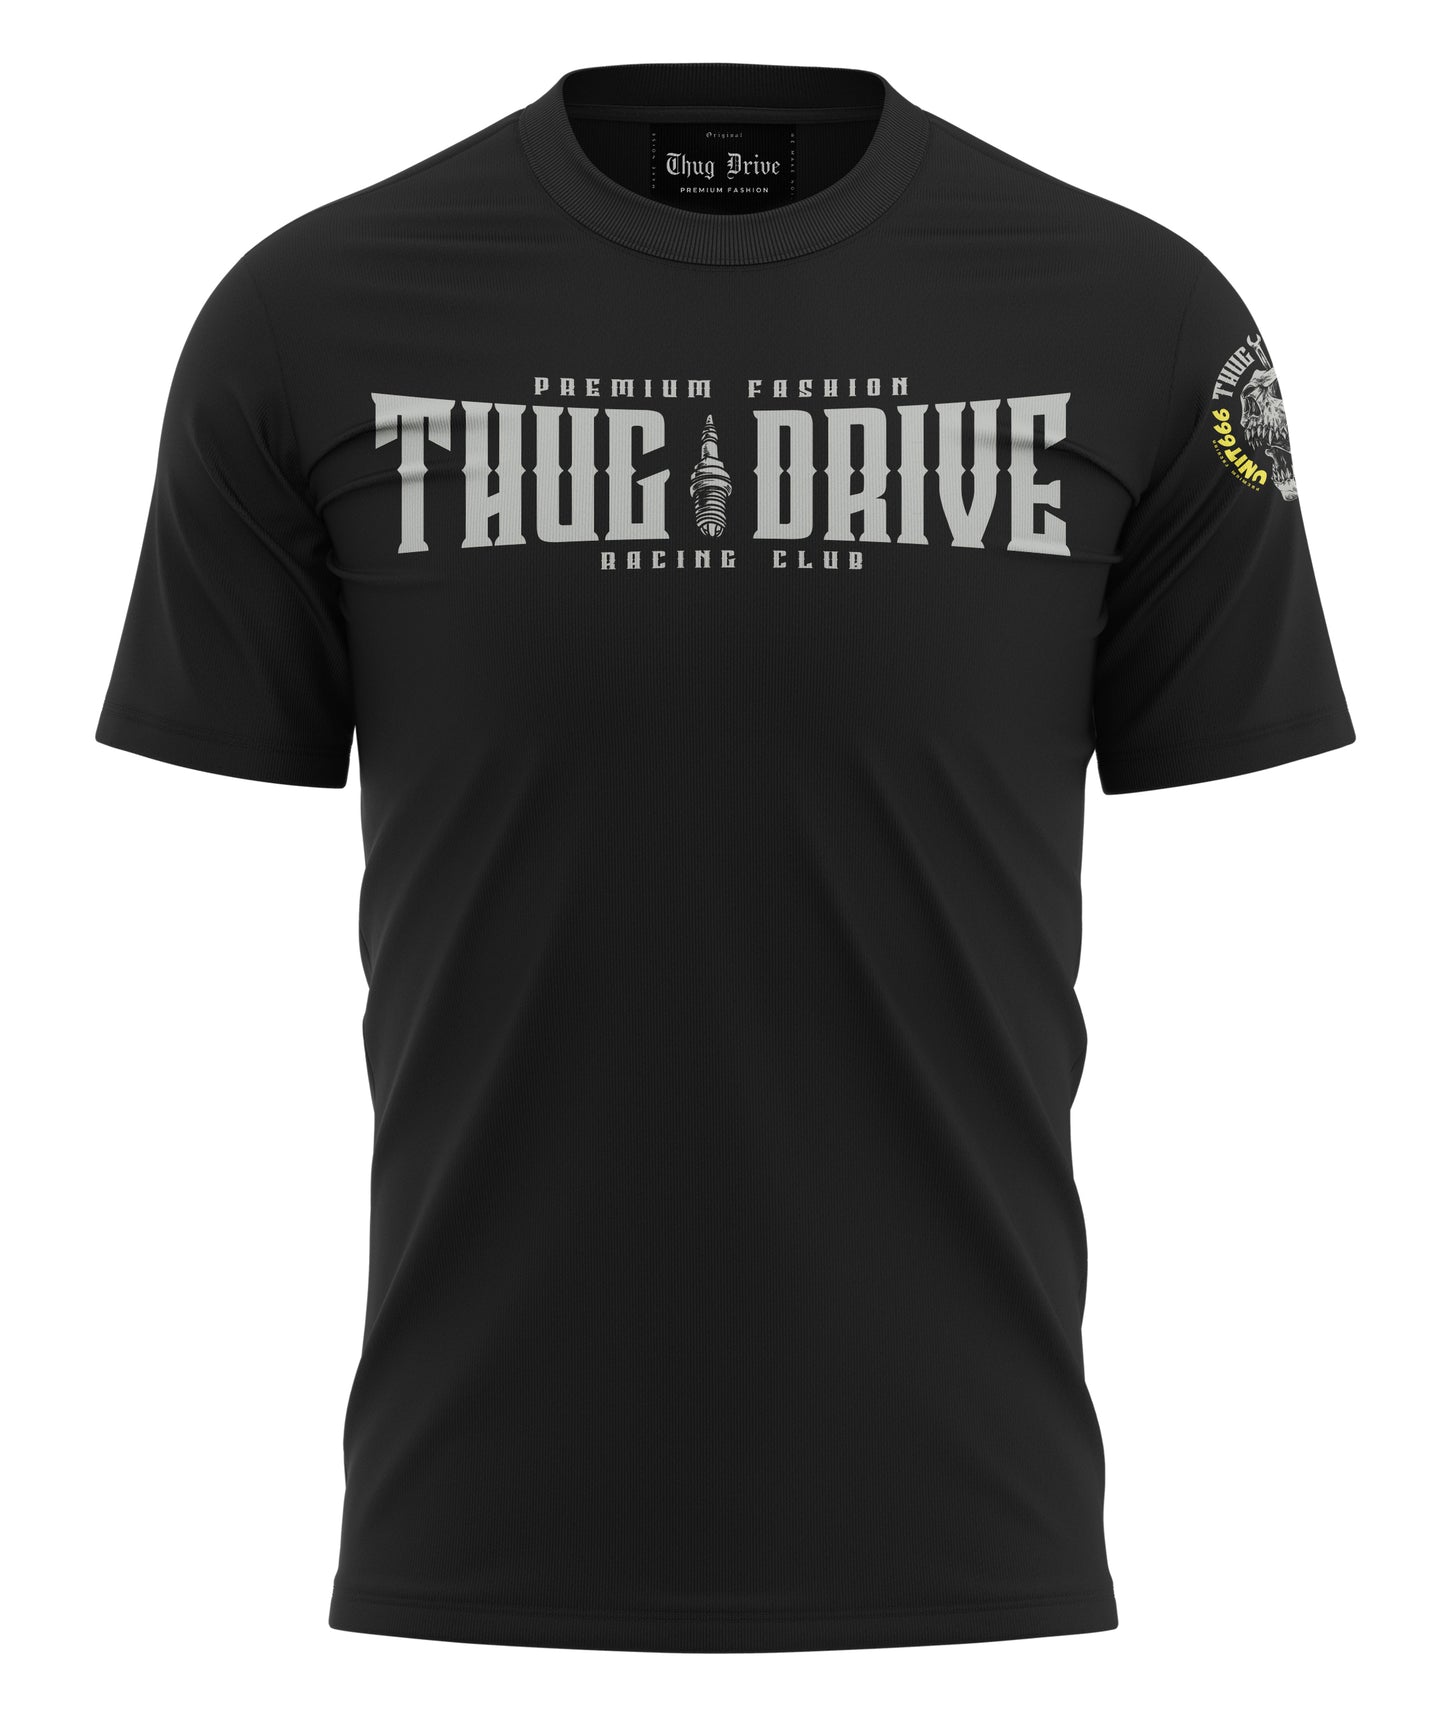 T-Shirt #1 Light - Drive it Schwarz / Grau Gelb